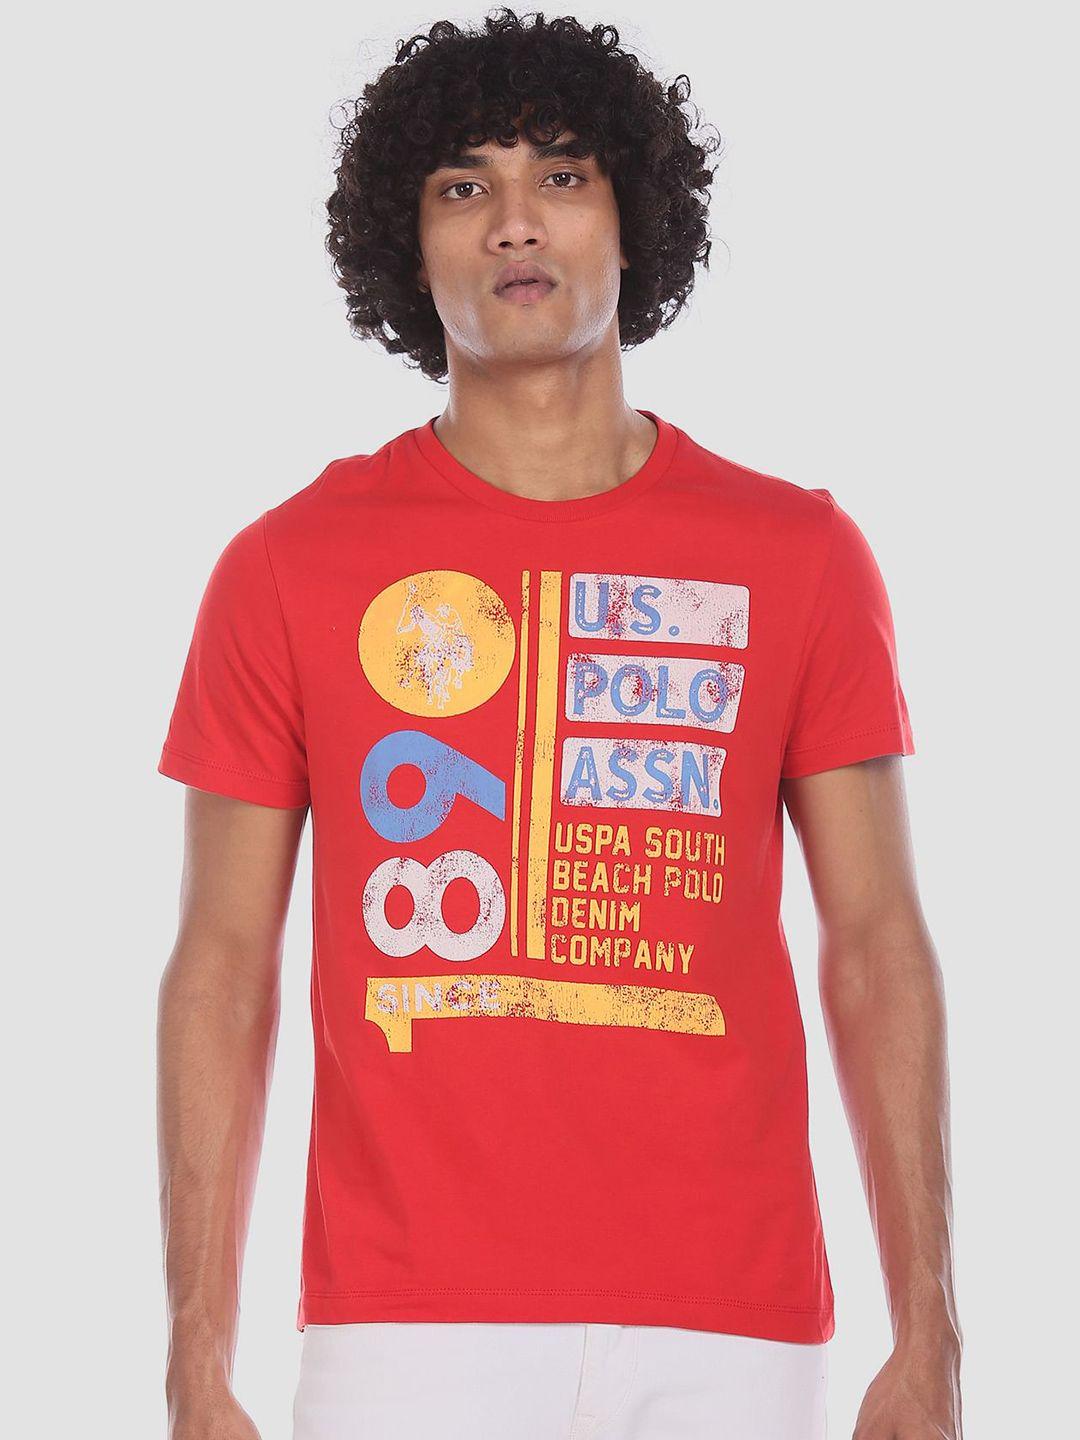 u.s. polo assn. denim co. men red slim fit brand logo printed round neck pure cotton t-shirt